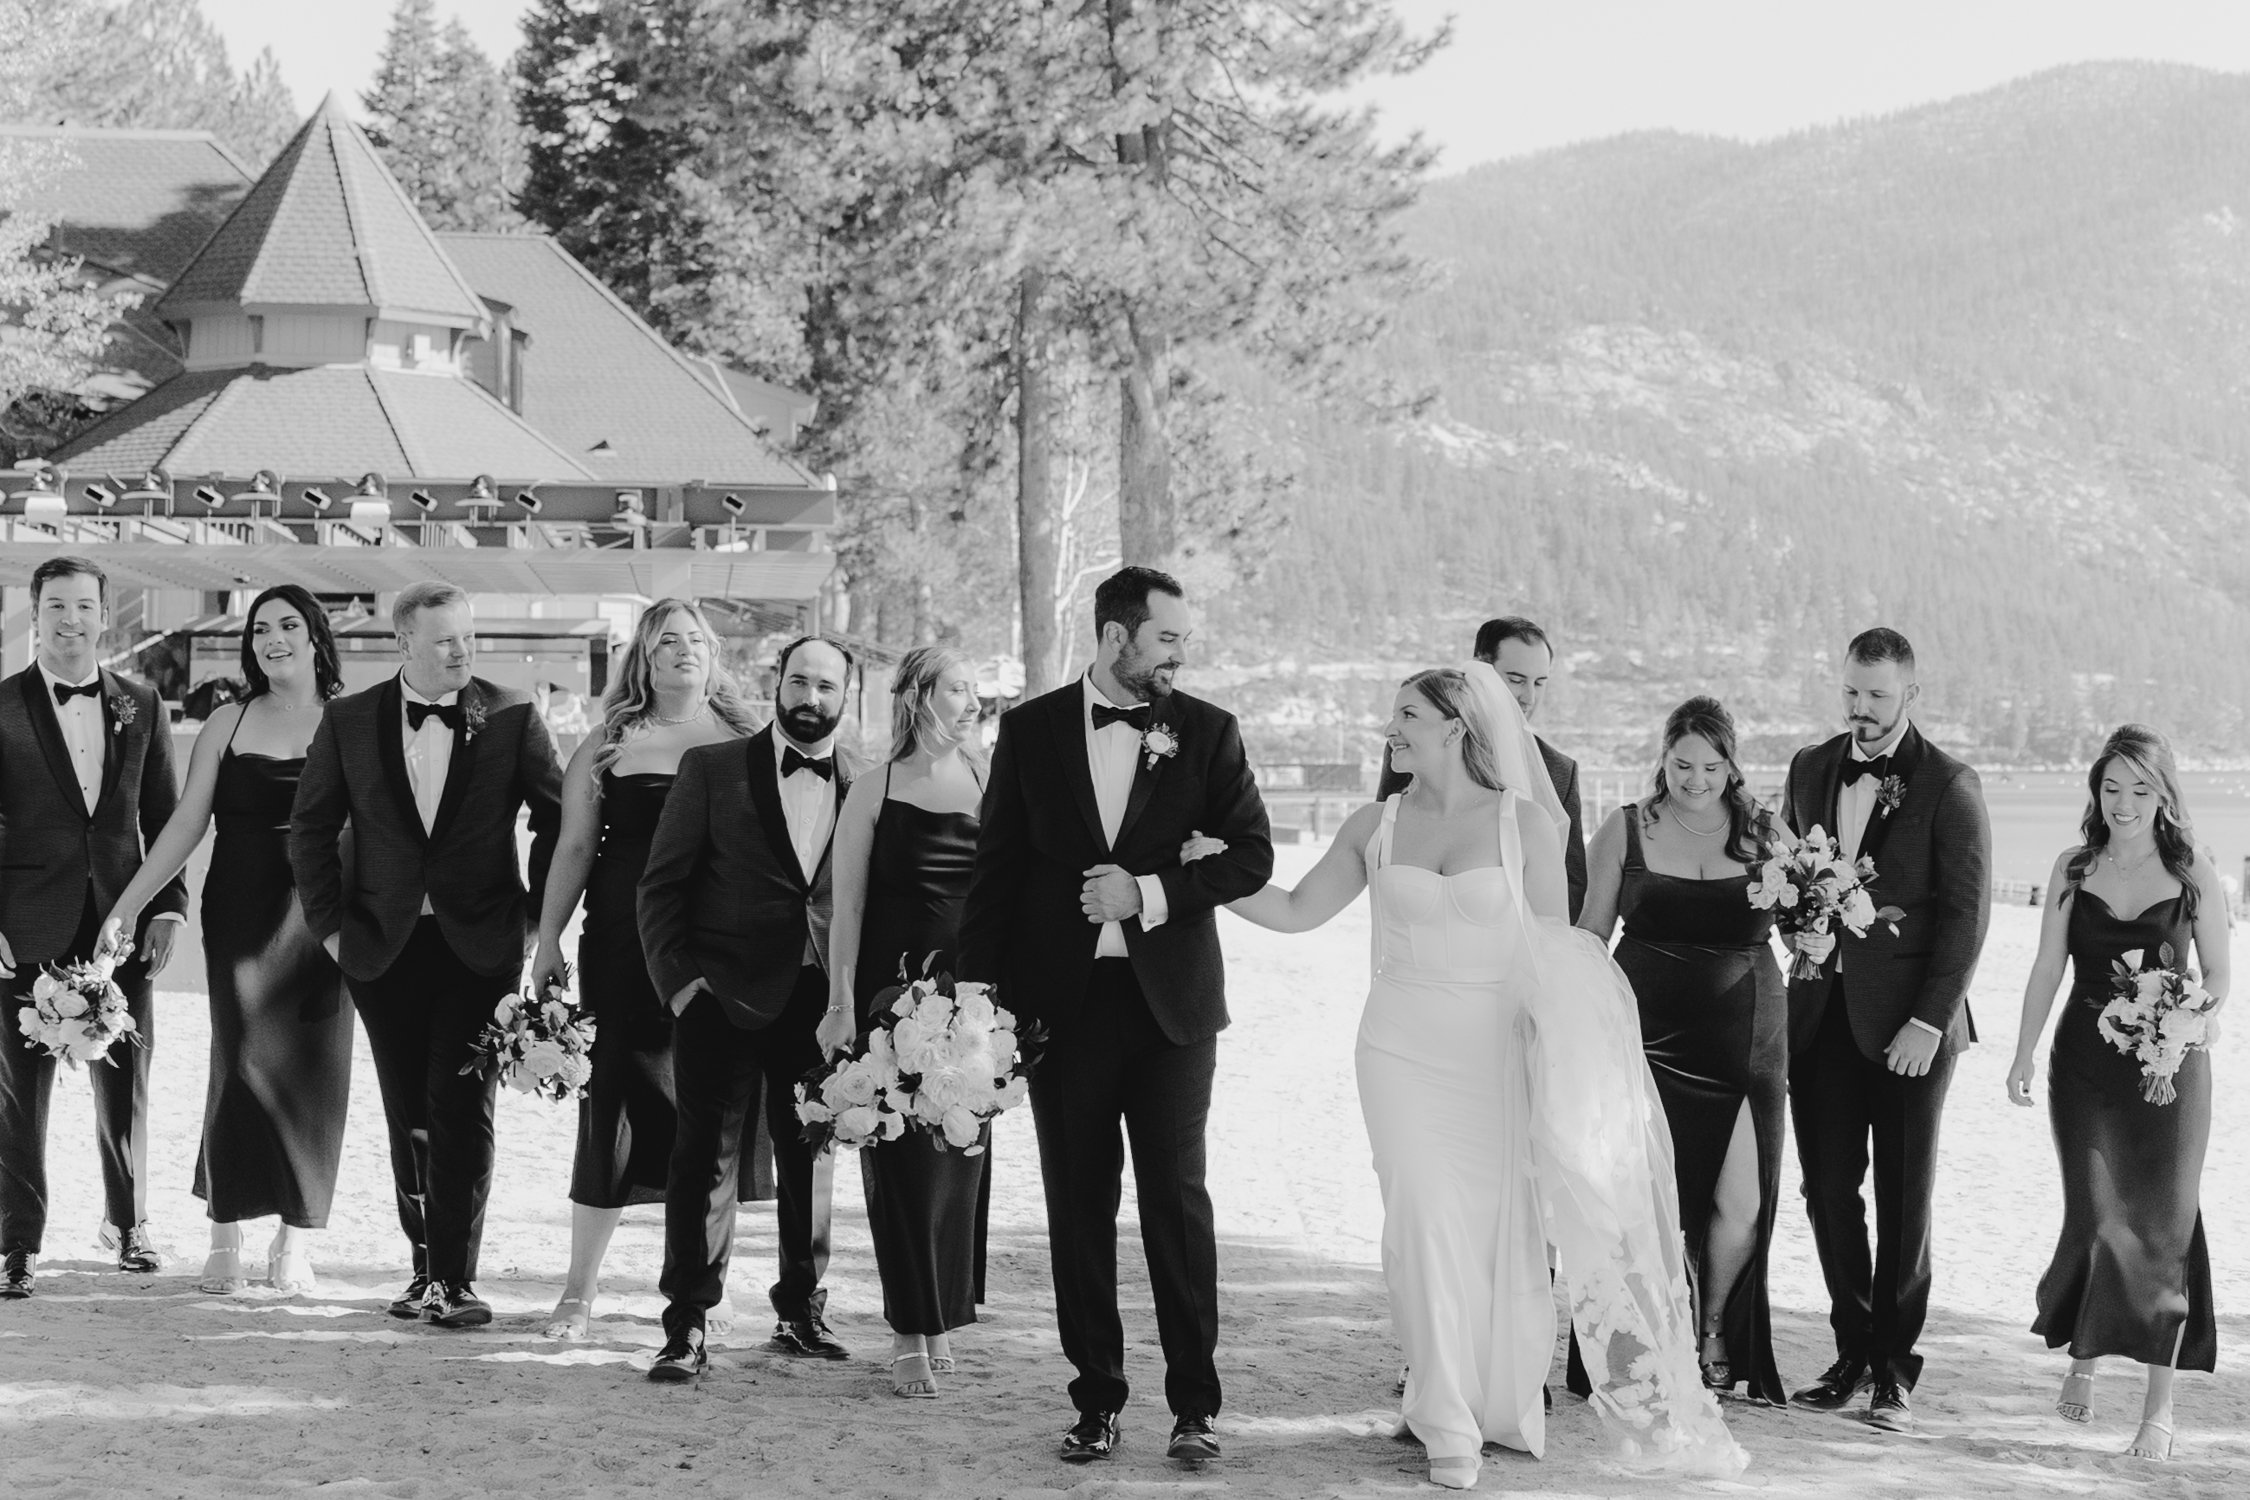 Hyatt Lake Tahoe wedding, photo of bridal party